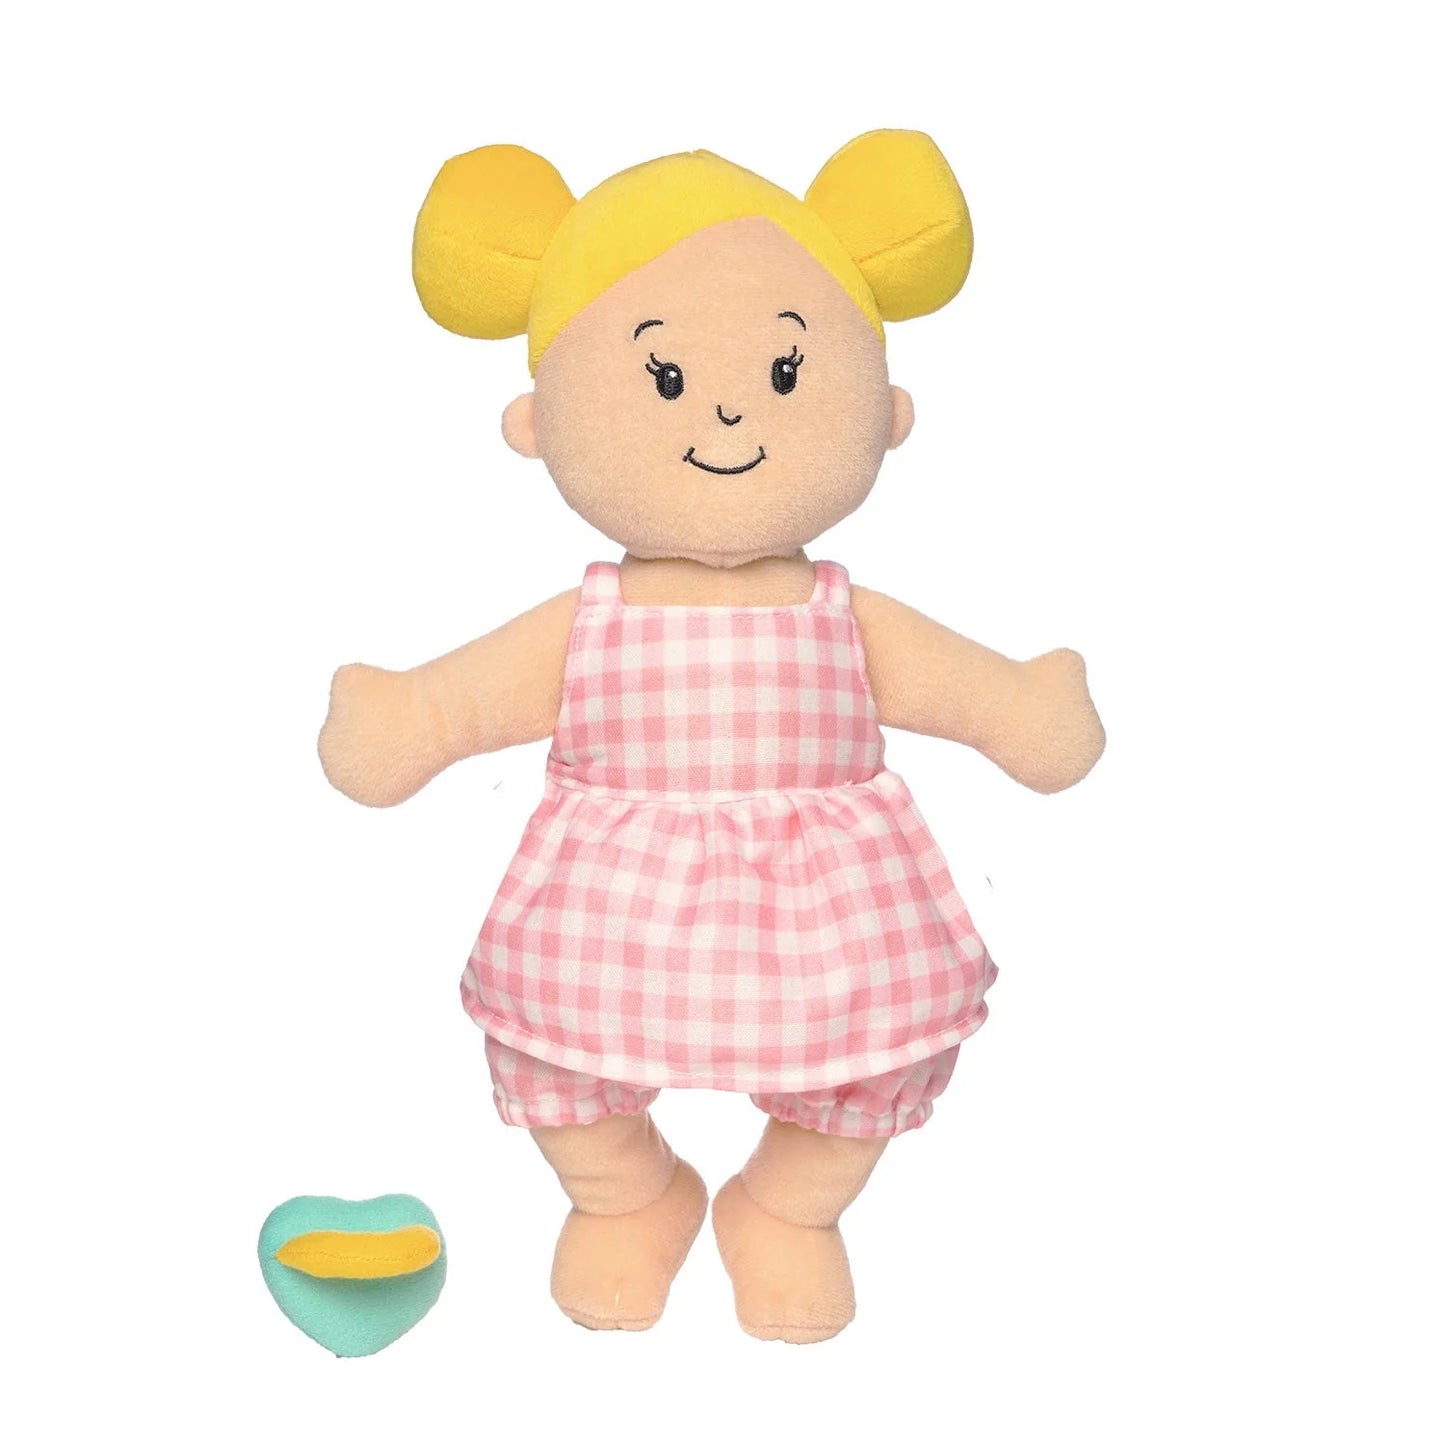 Baby Stella Soft Doll